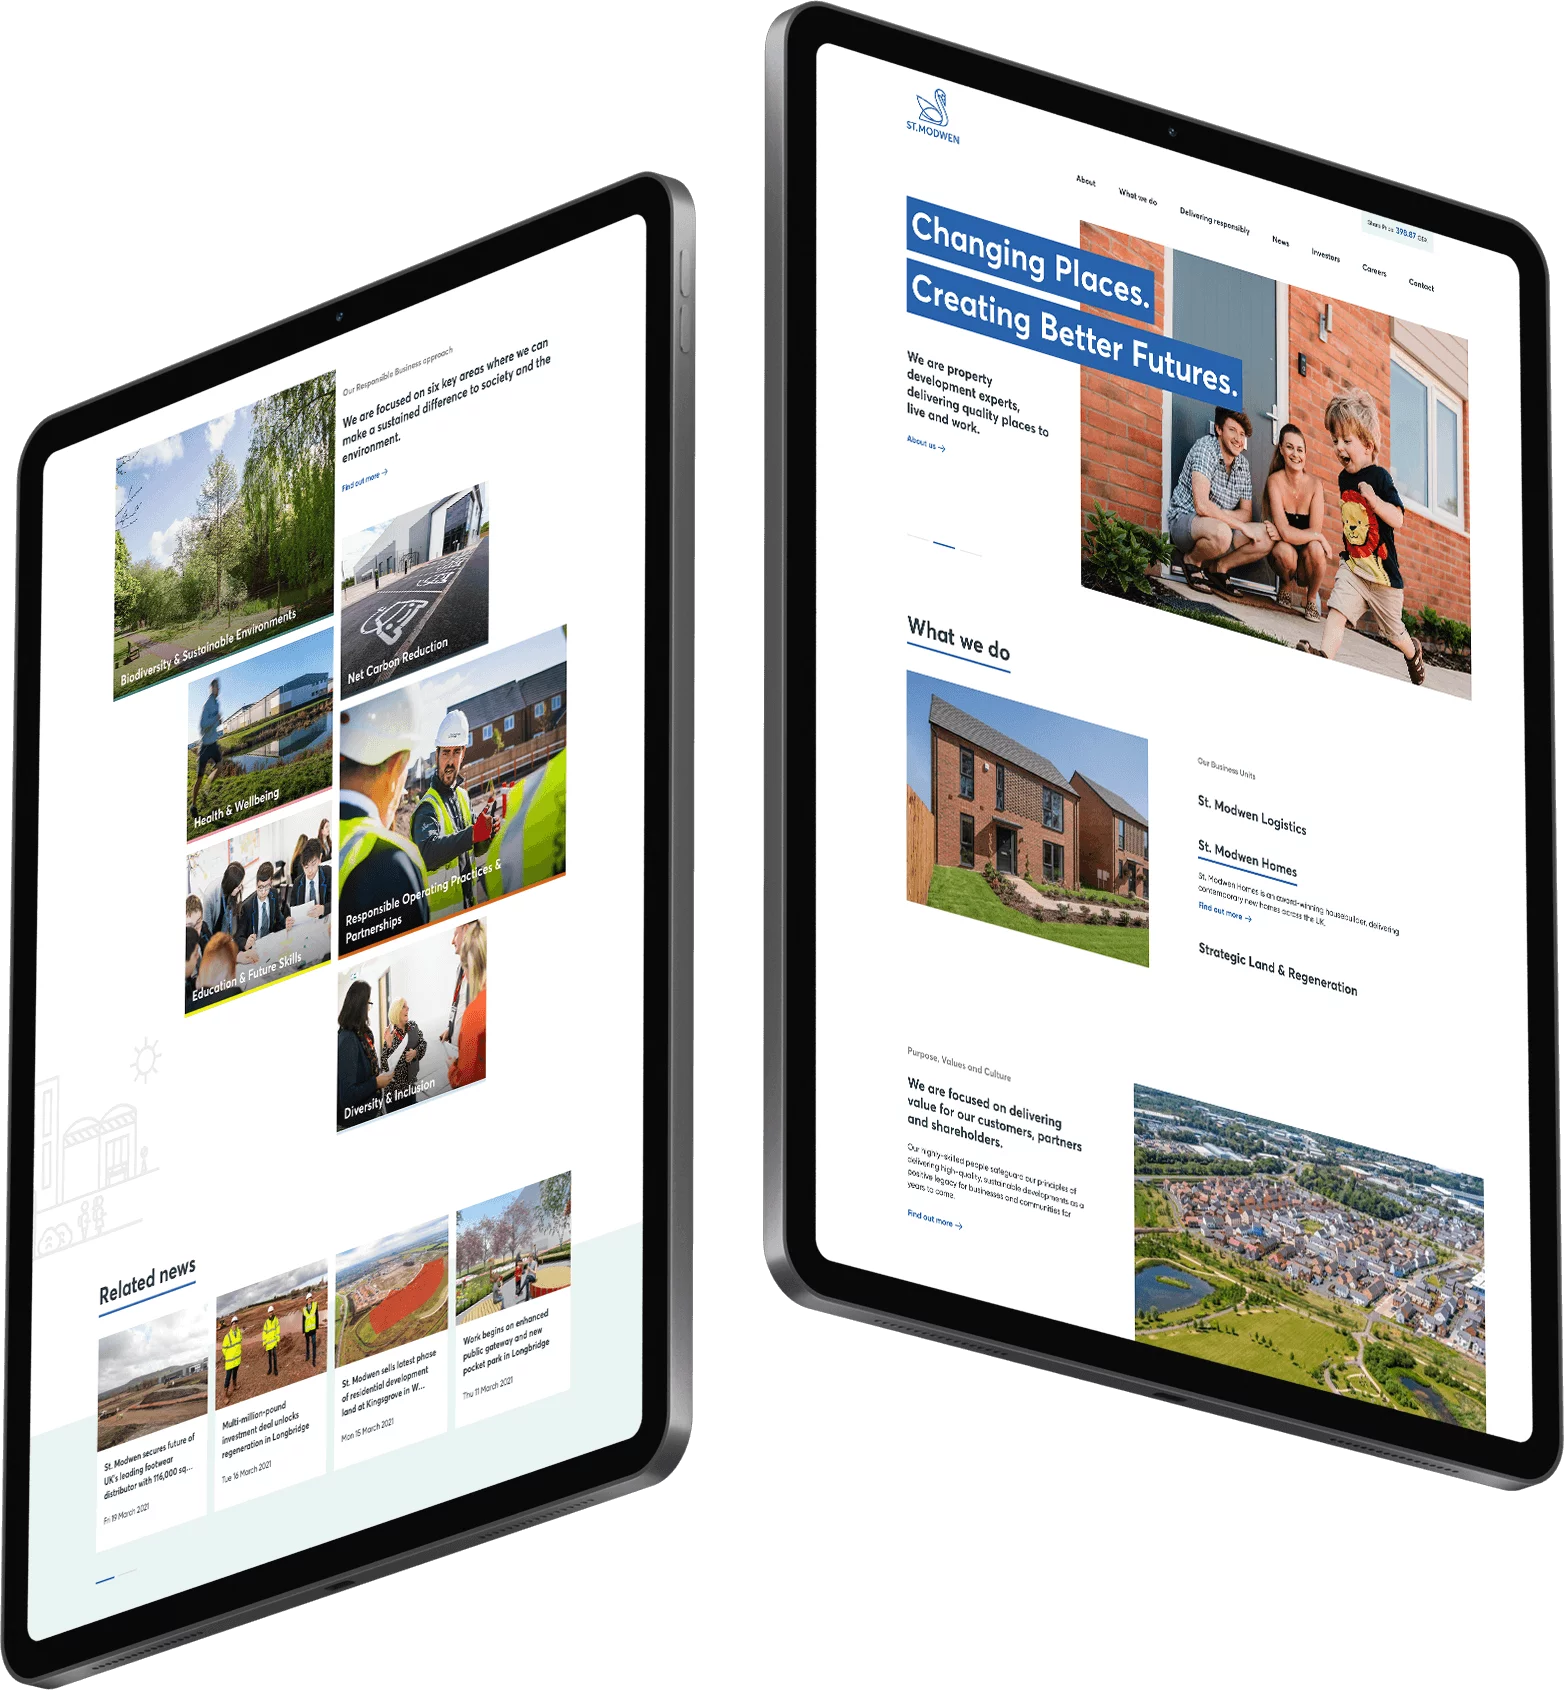 St. Modwen website displayed within 2 iPads